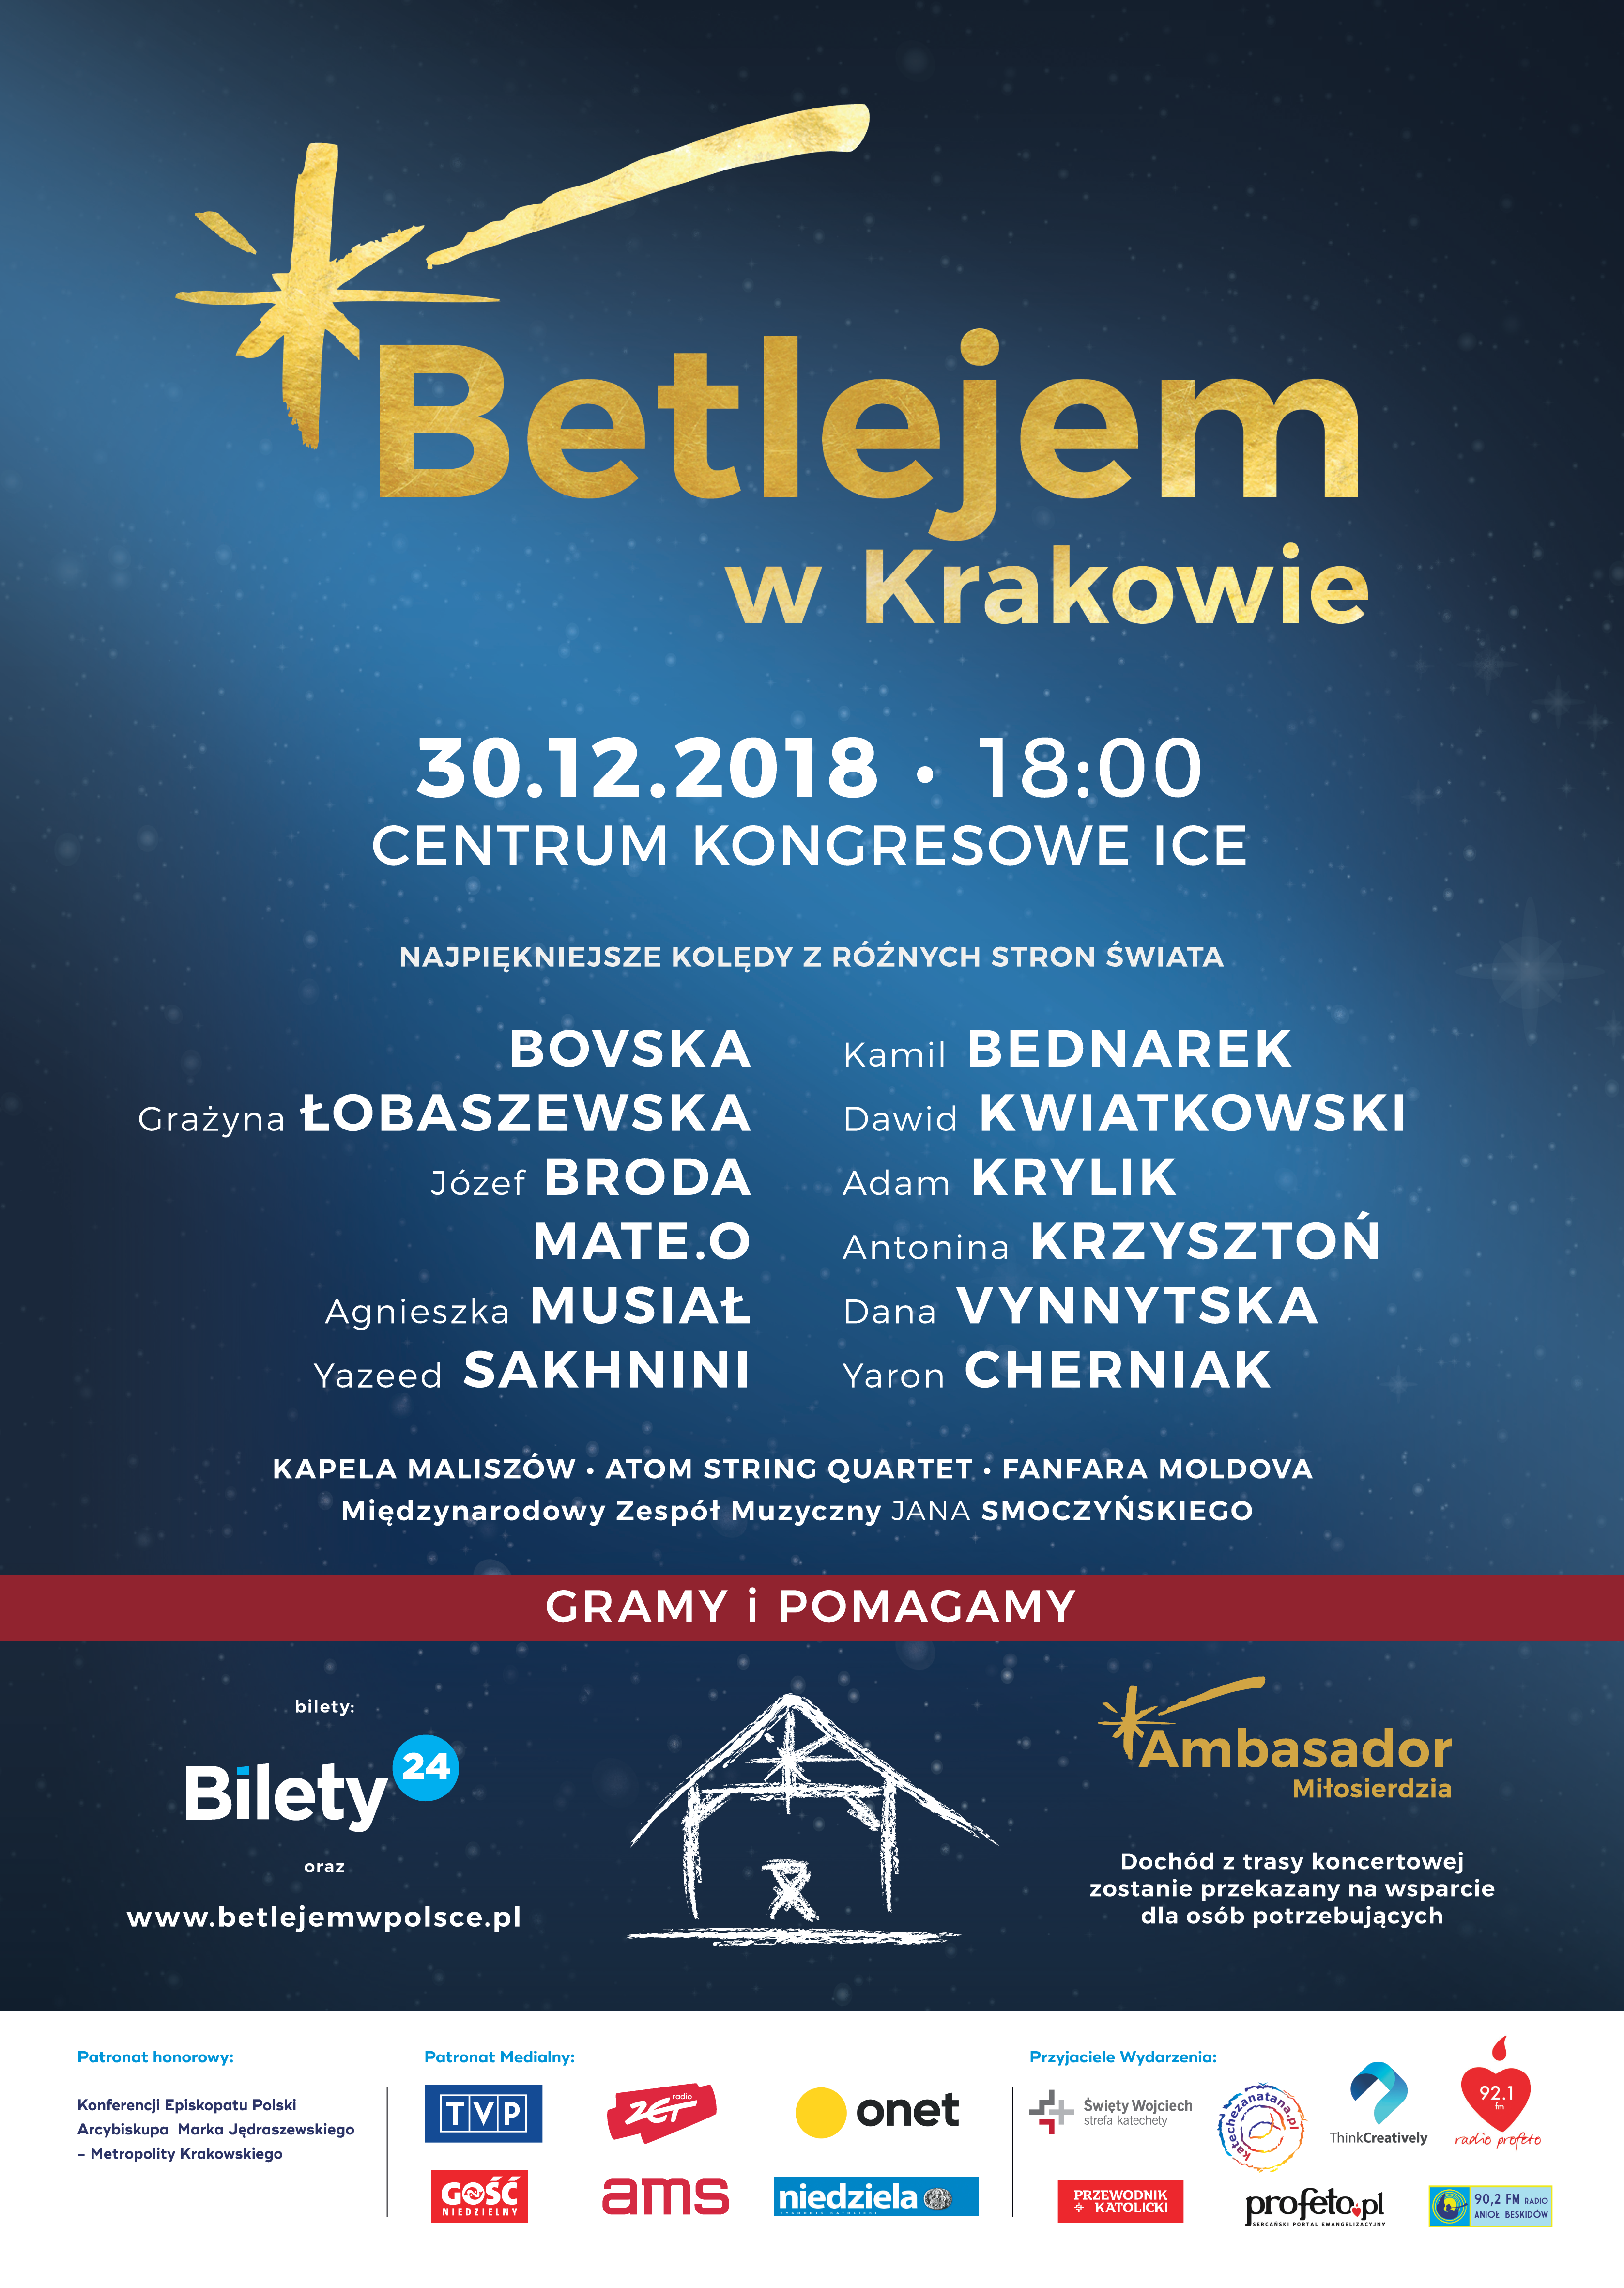 Betlejem w Krakowie